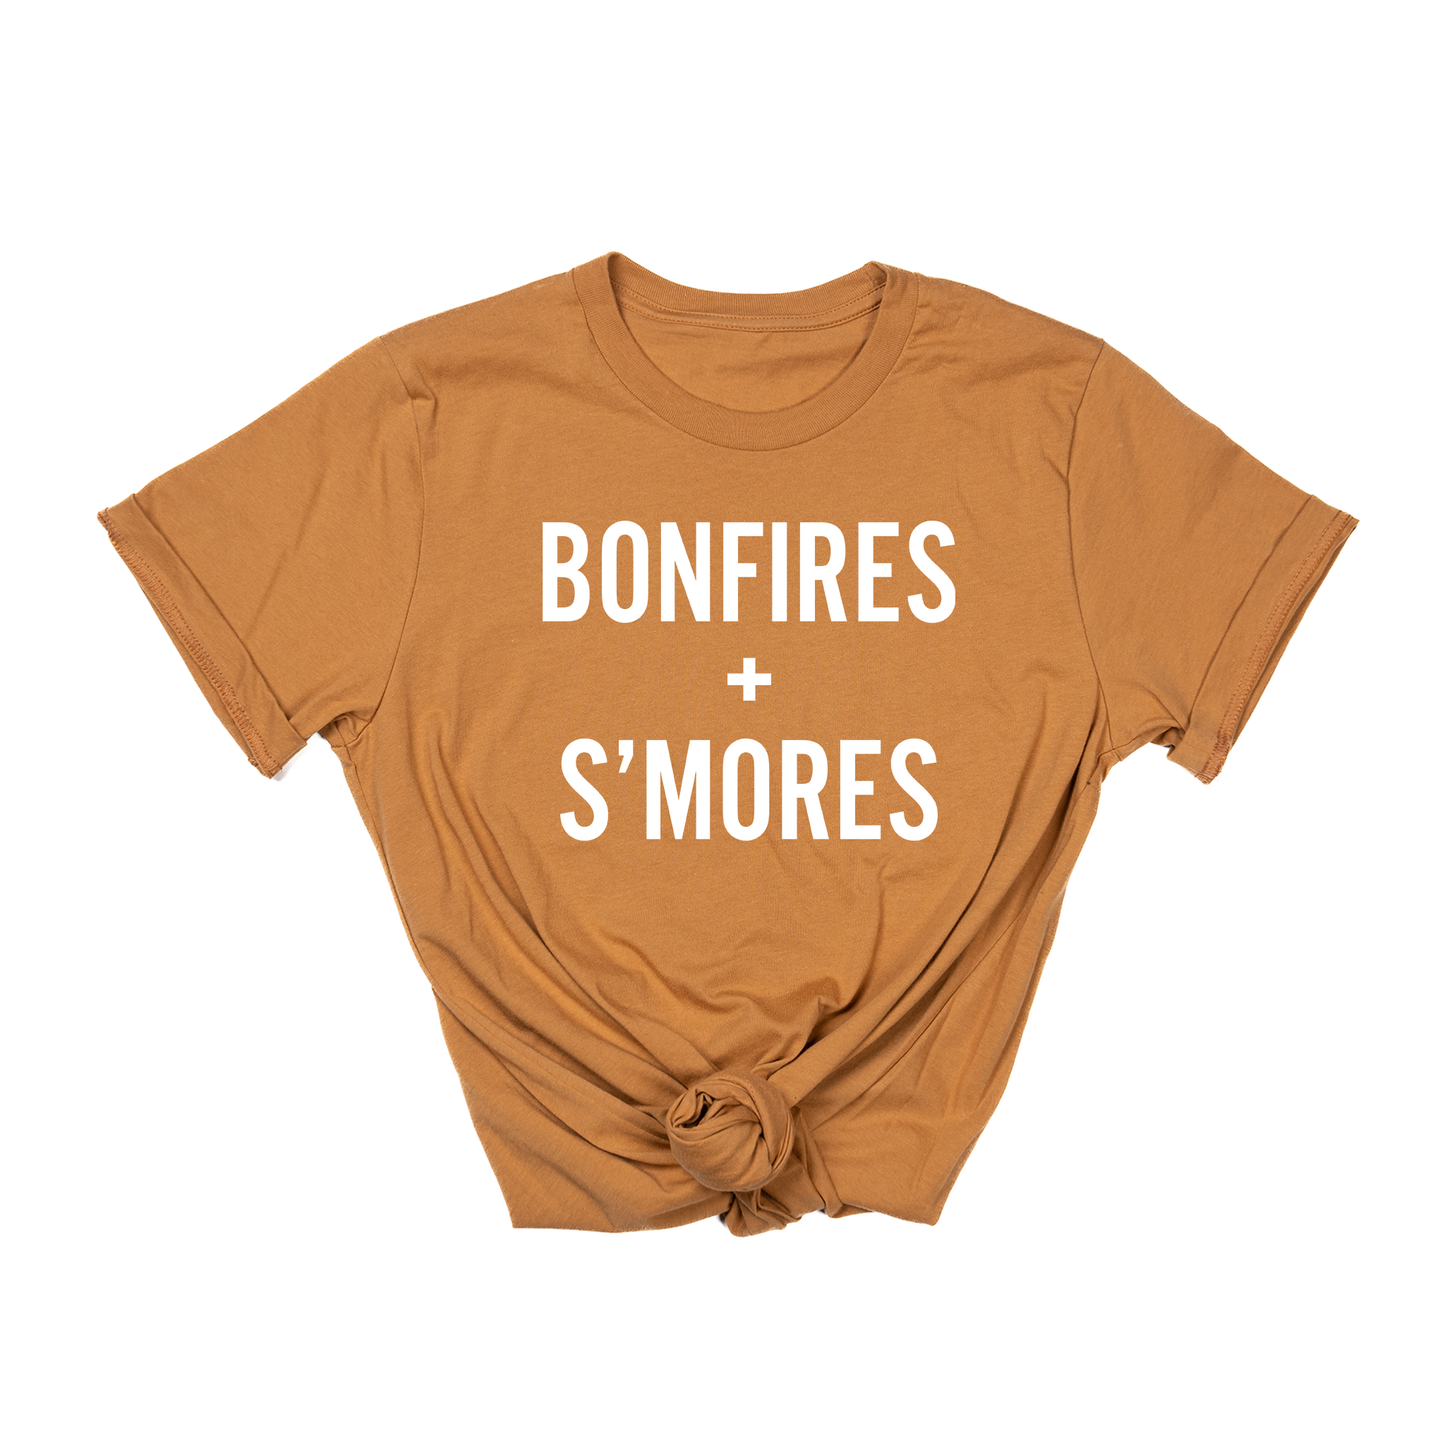 BONFIRES + S'MORES (White) - Tee (Camel)